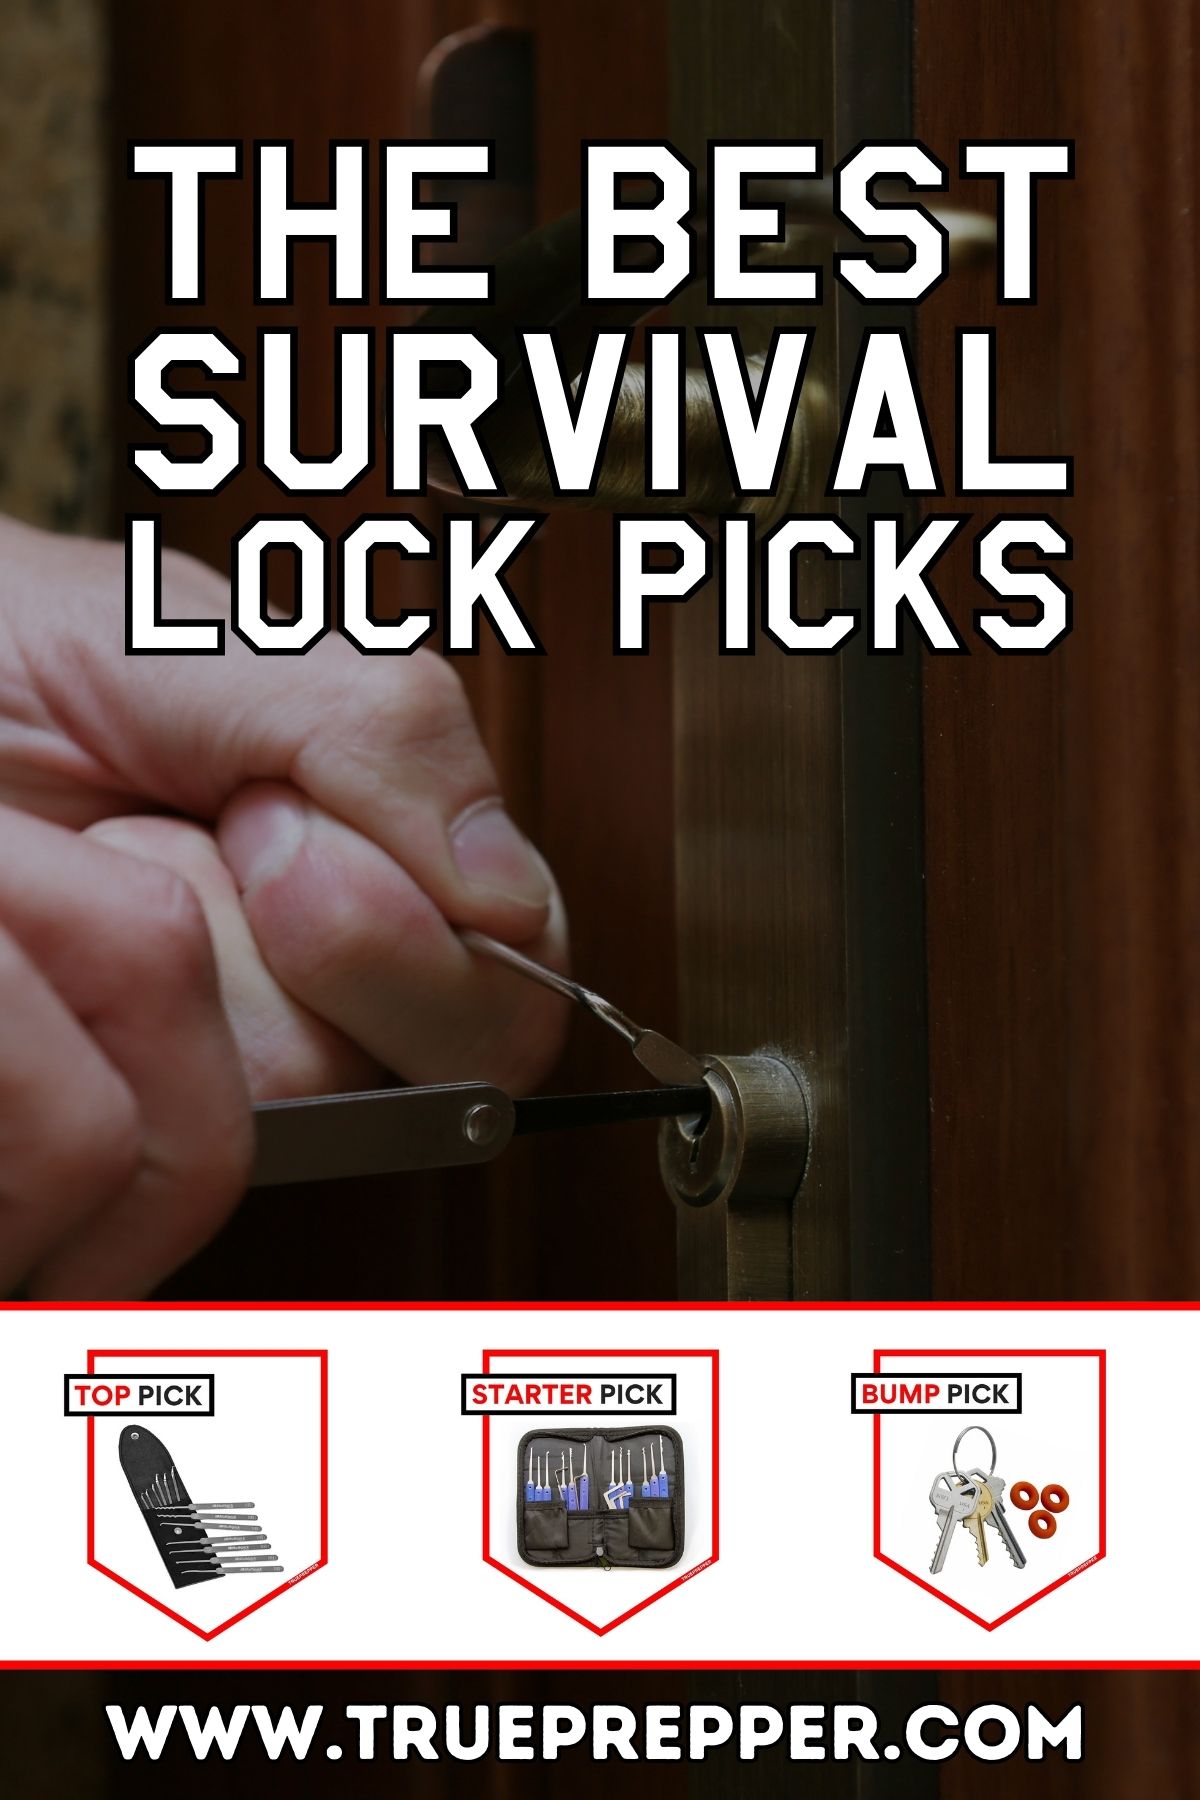 The Best Survival Lock Picks